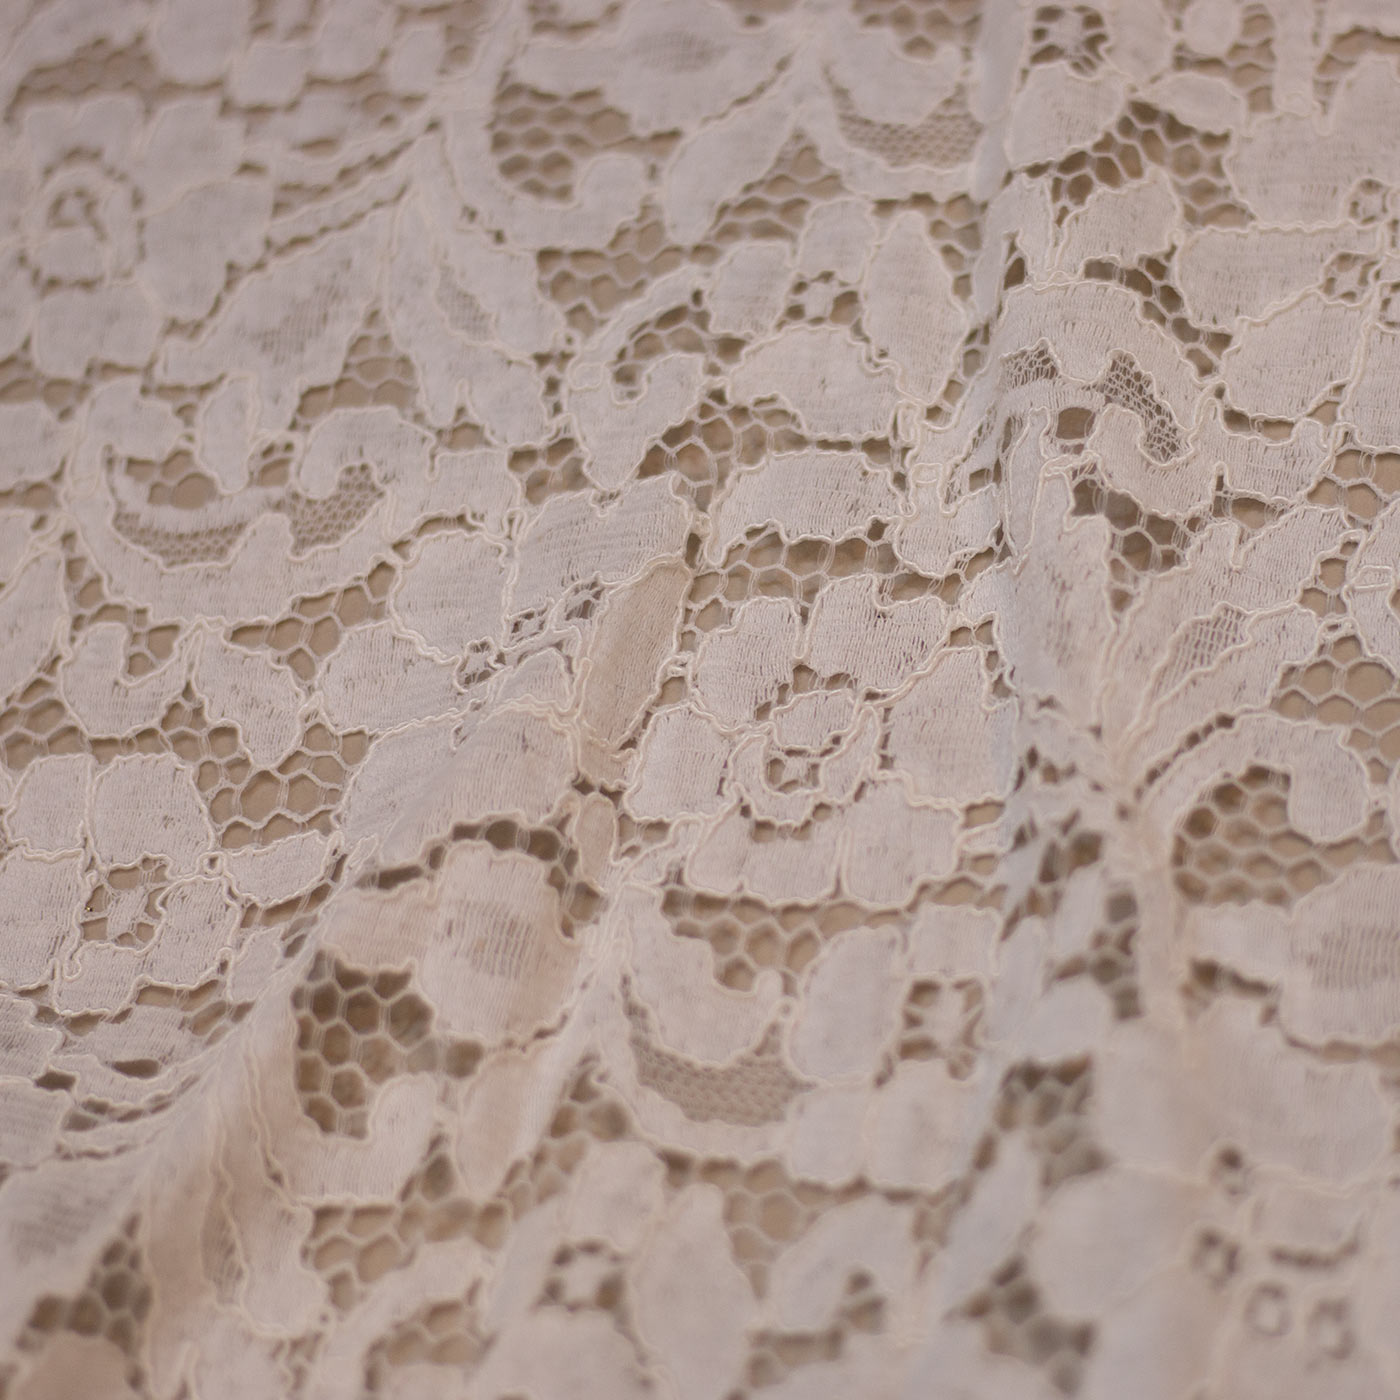 White lace fabric